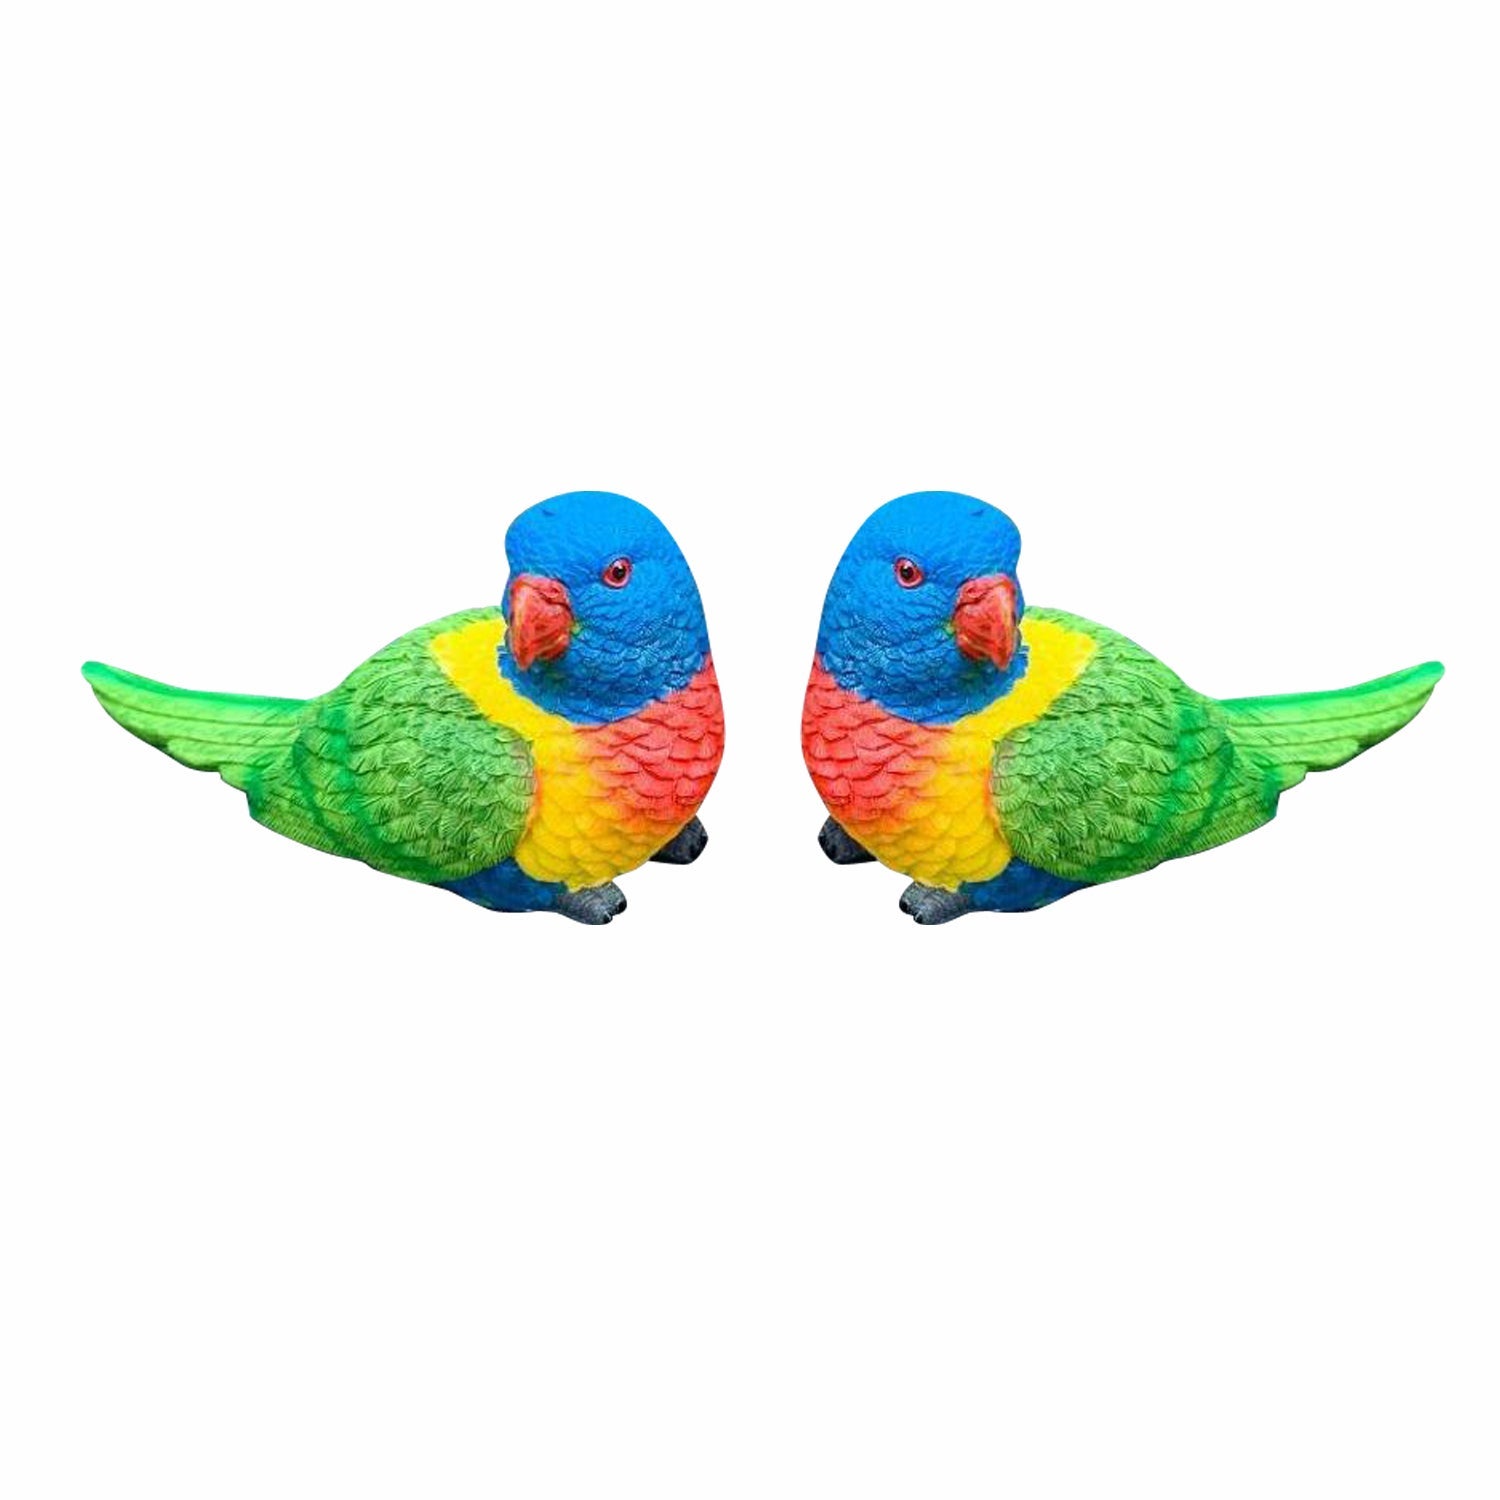 Rainbow Lorikeet Bird Figurine Statue Garden Ornaments Decor set of 2 Birds